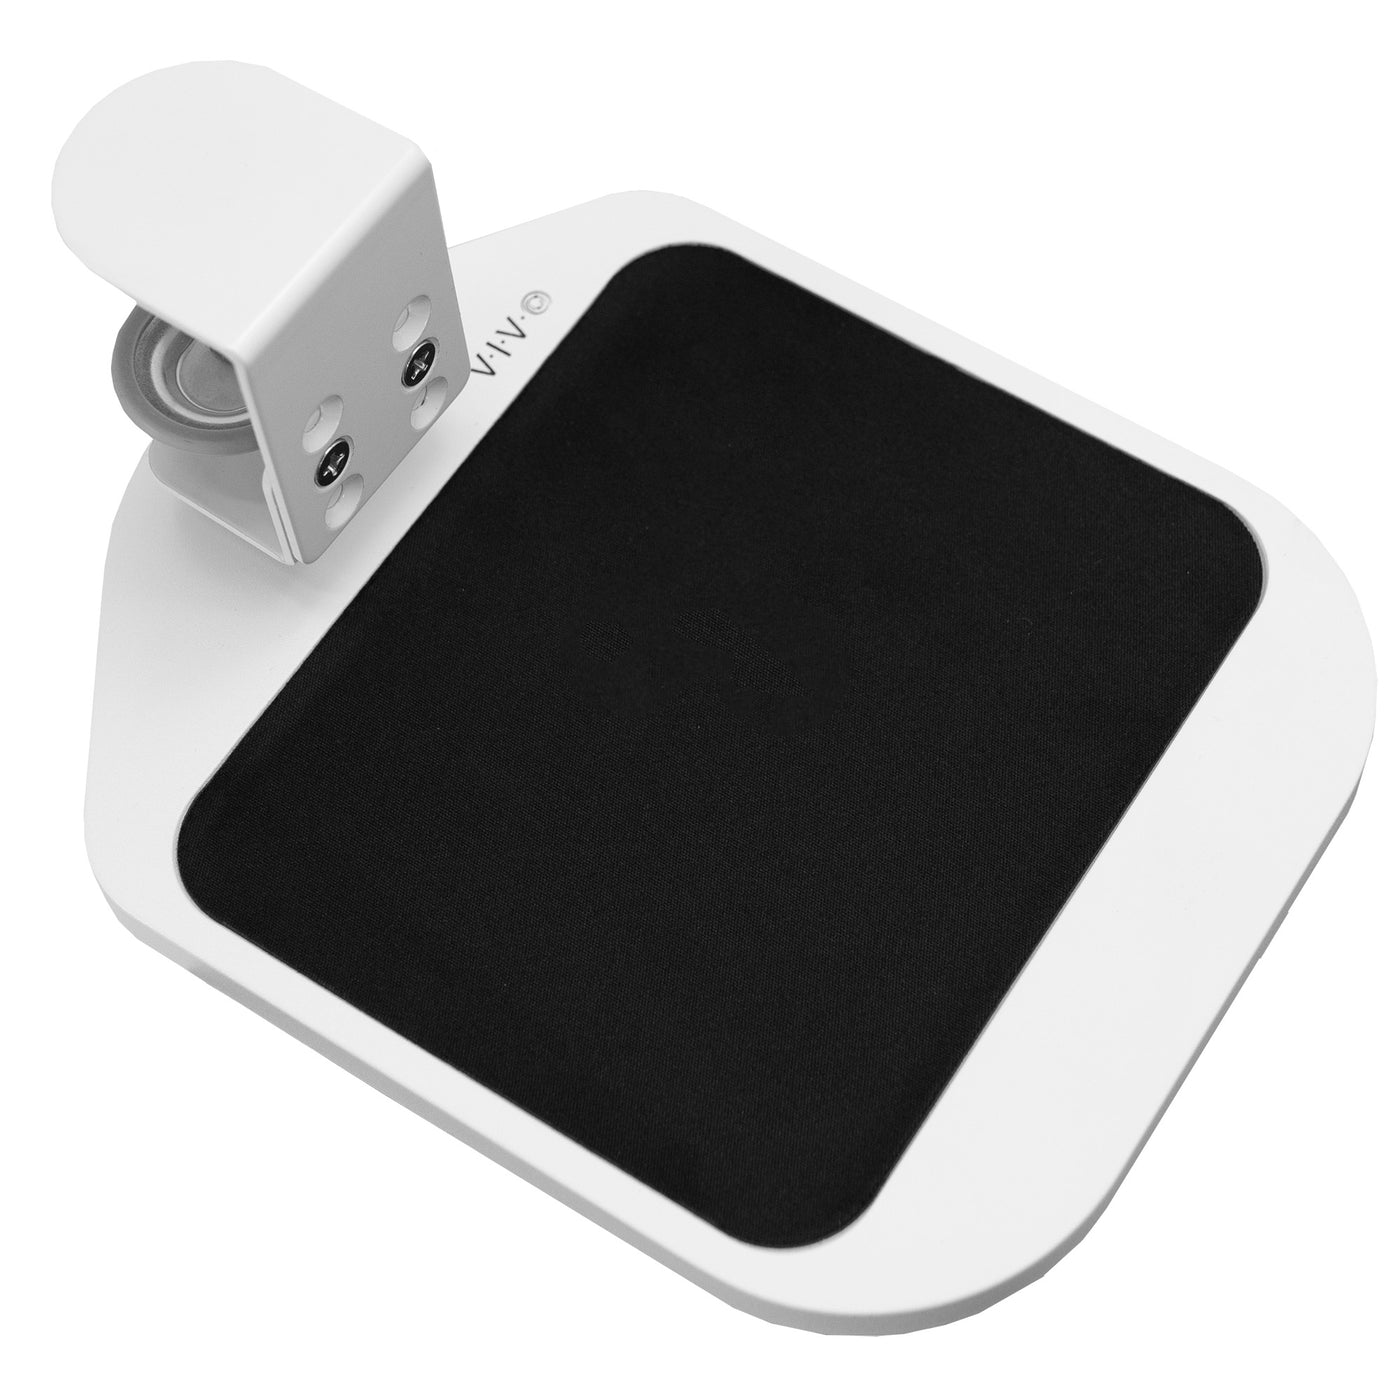 Lightweight clamp-on adjustable mouse pad platform for comfortable ergonomic use.